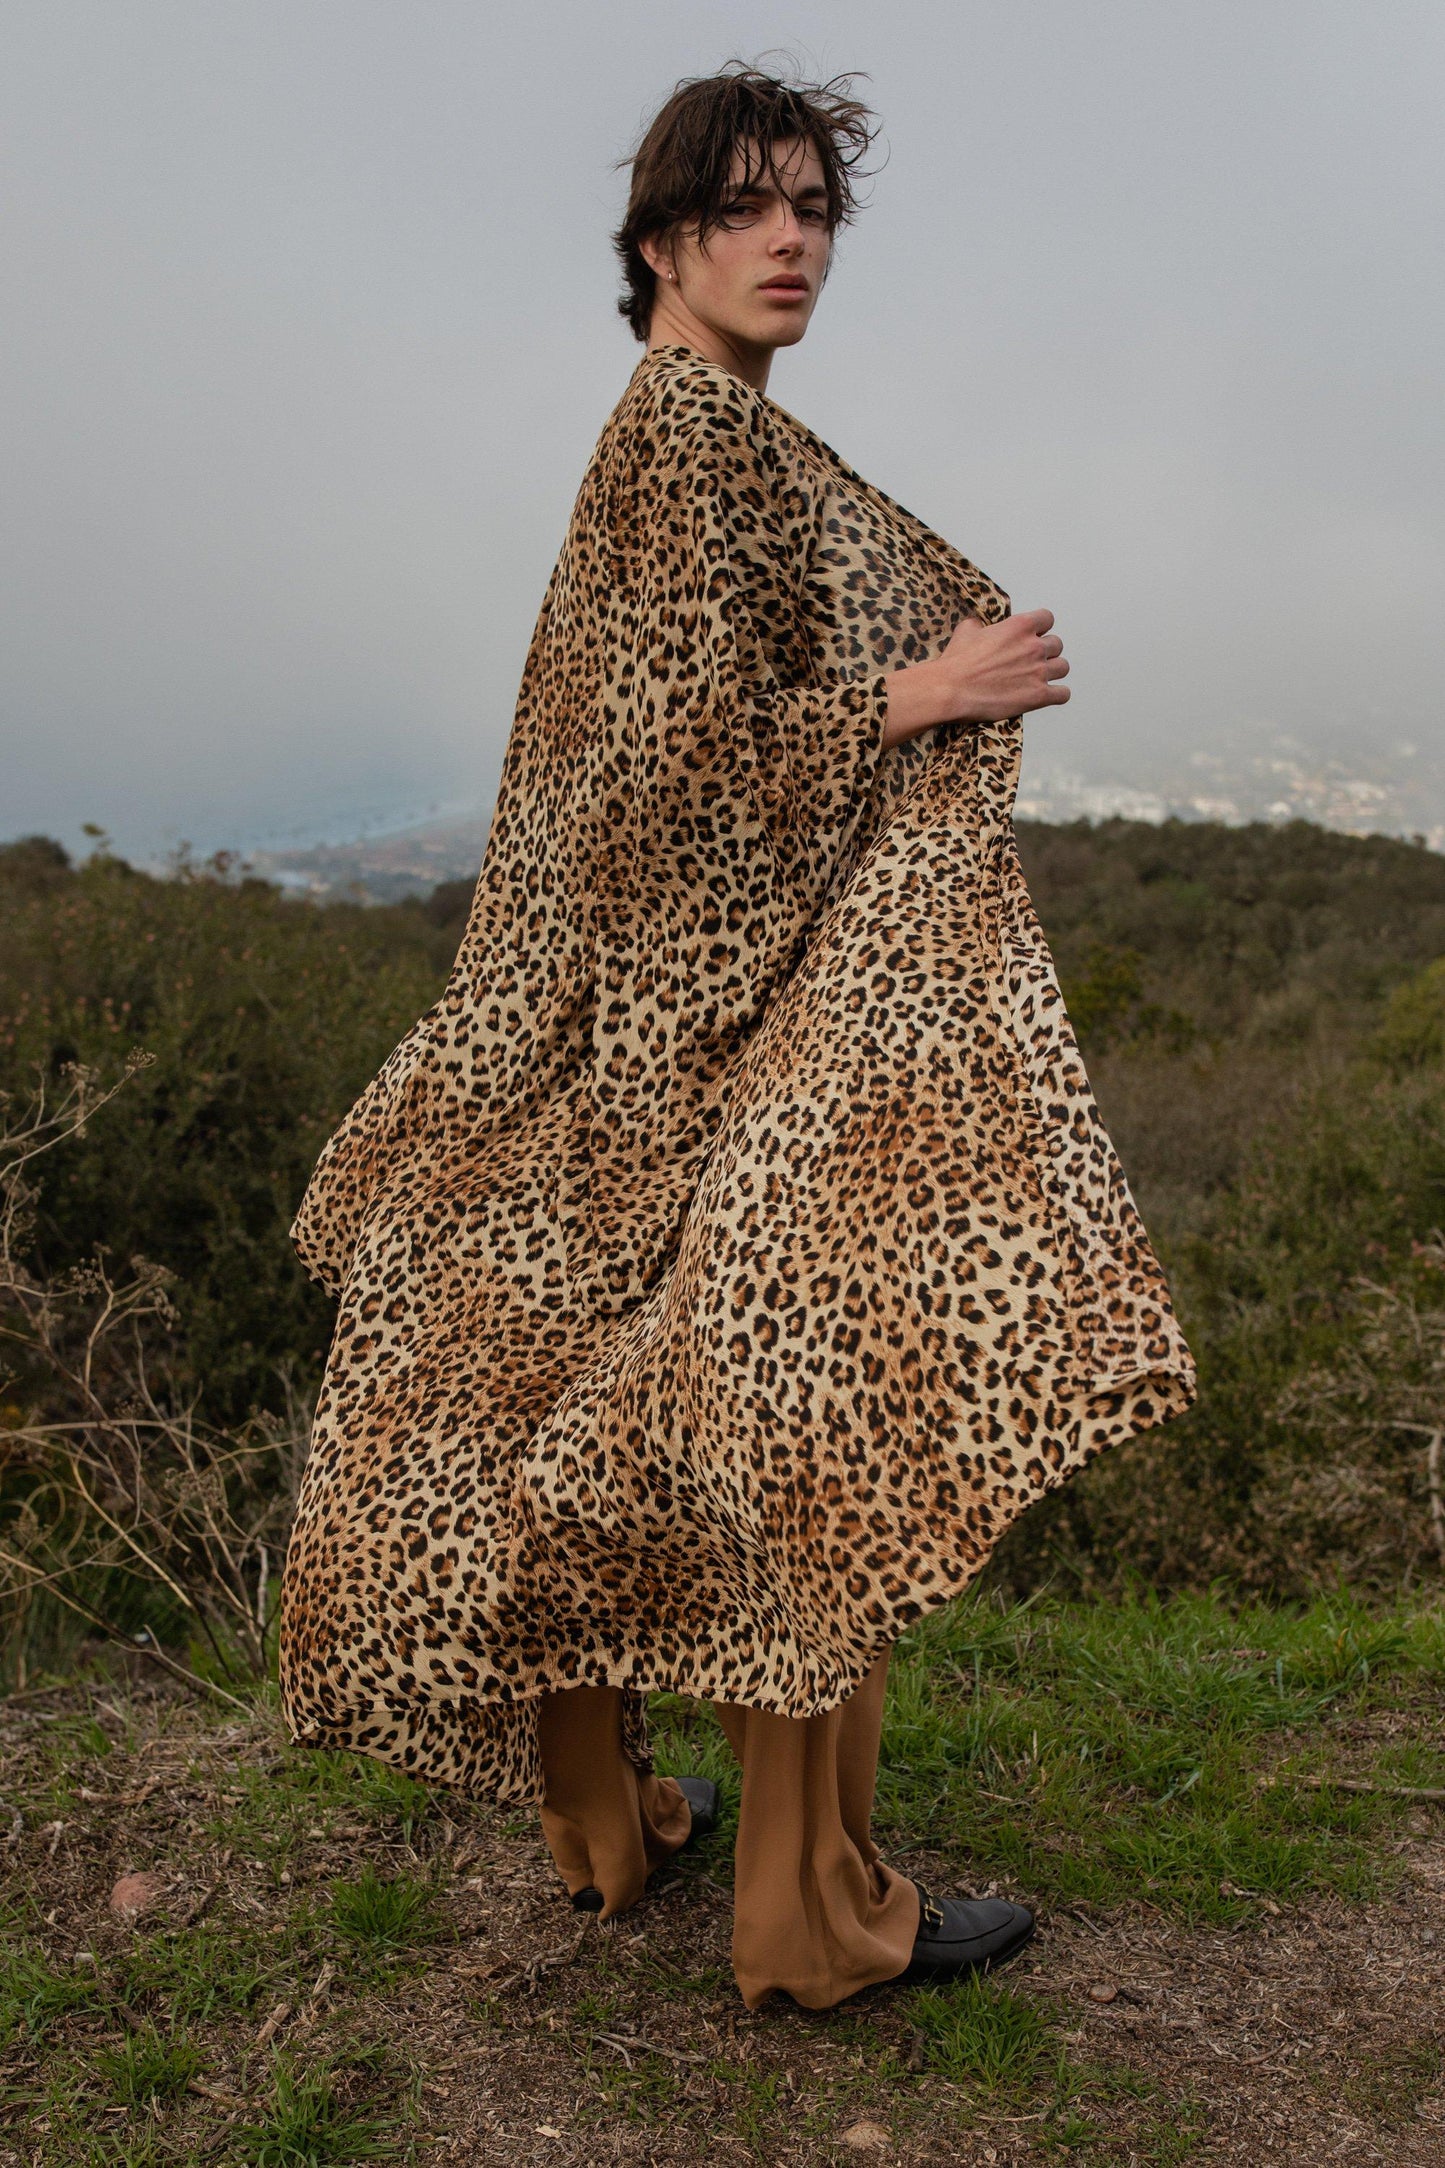 jennafer grace leon leopard cheetah animal print kimono wrap dress coverup duster boho bohemian hippie beach wear resort holiday lounge loungewear handmade unisex